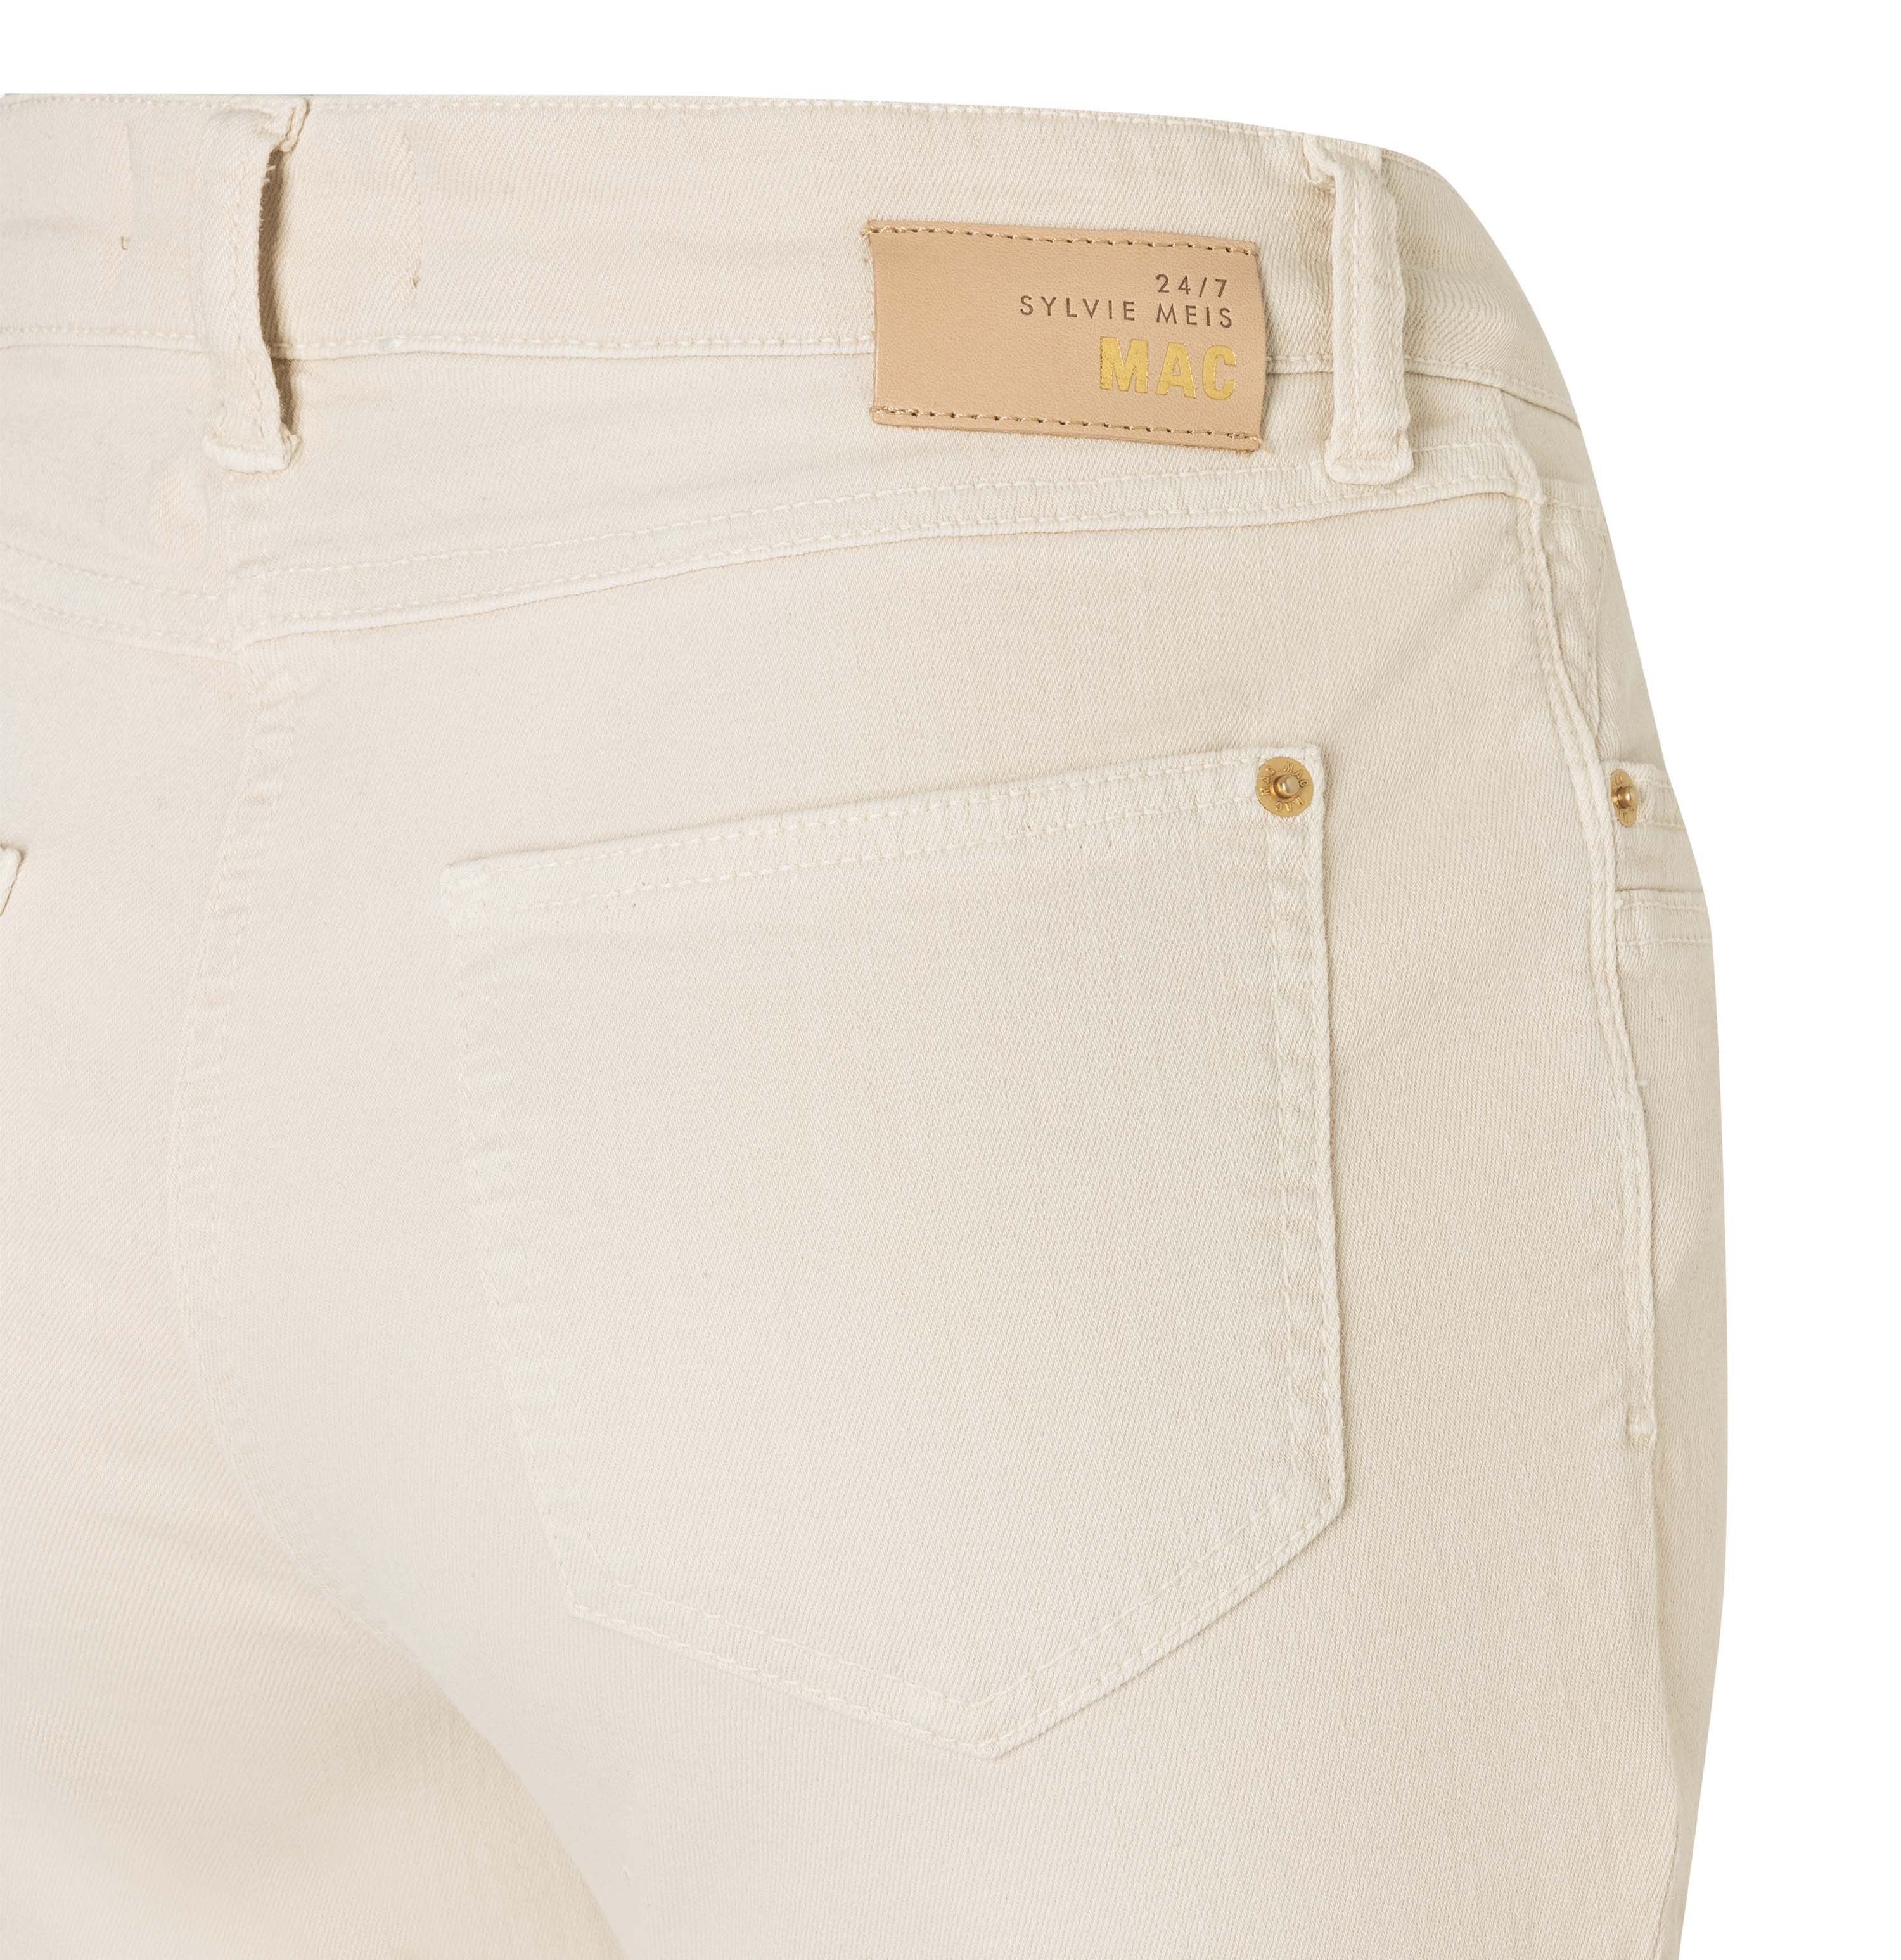 MEL weiß white vintage Stretch-Jeans 2620-00-0389 MAC MAC SYLVIE - 020W MEIS